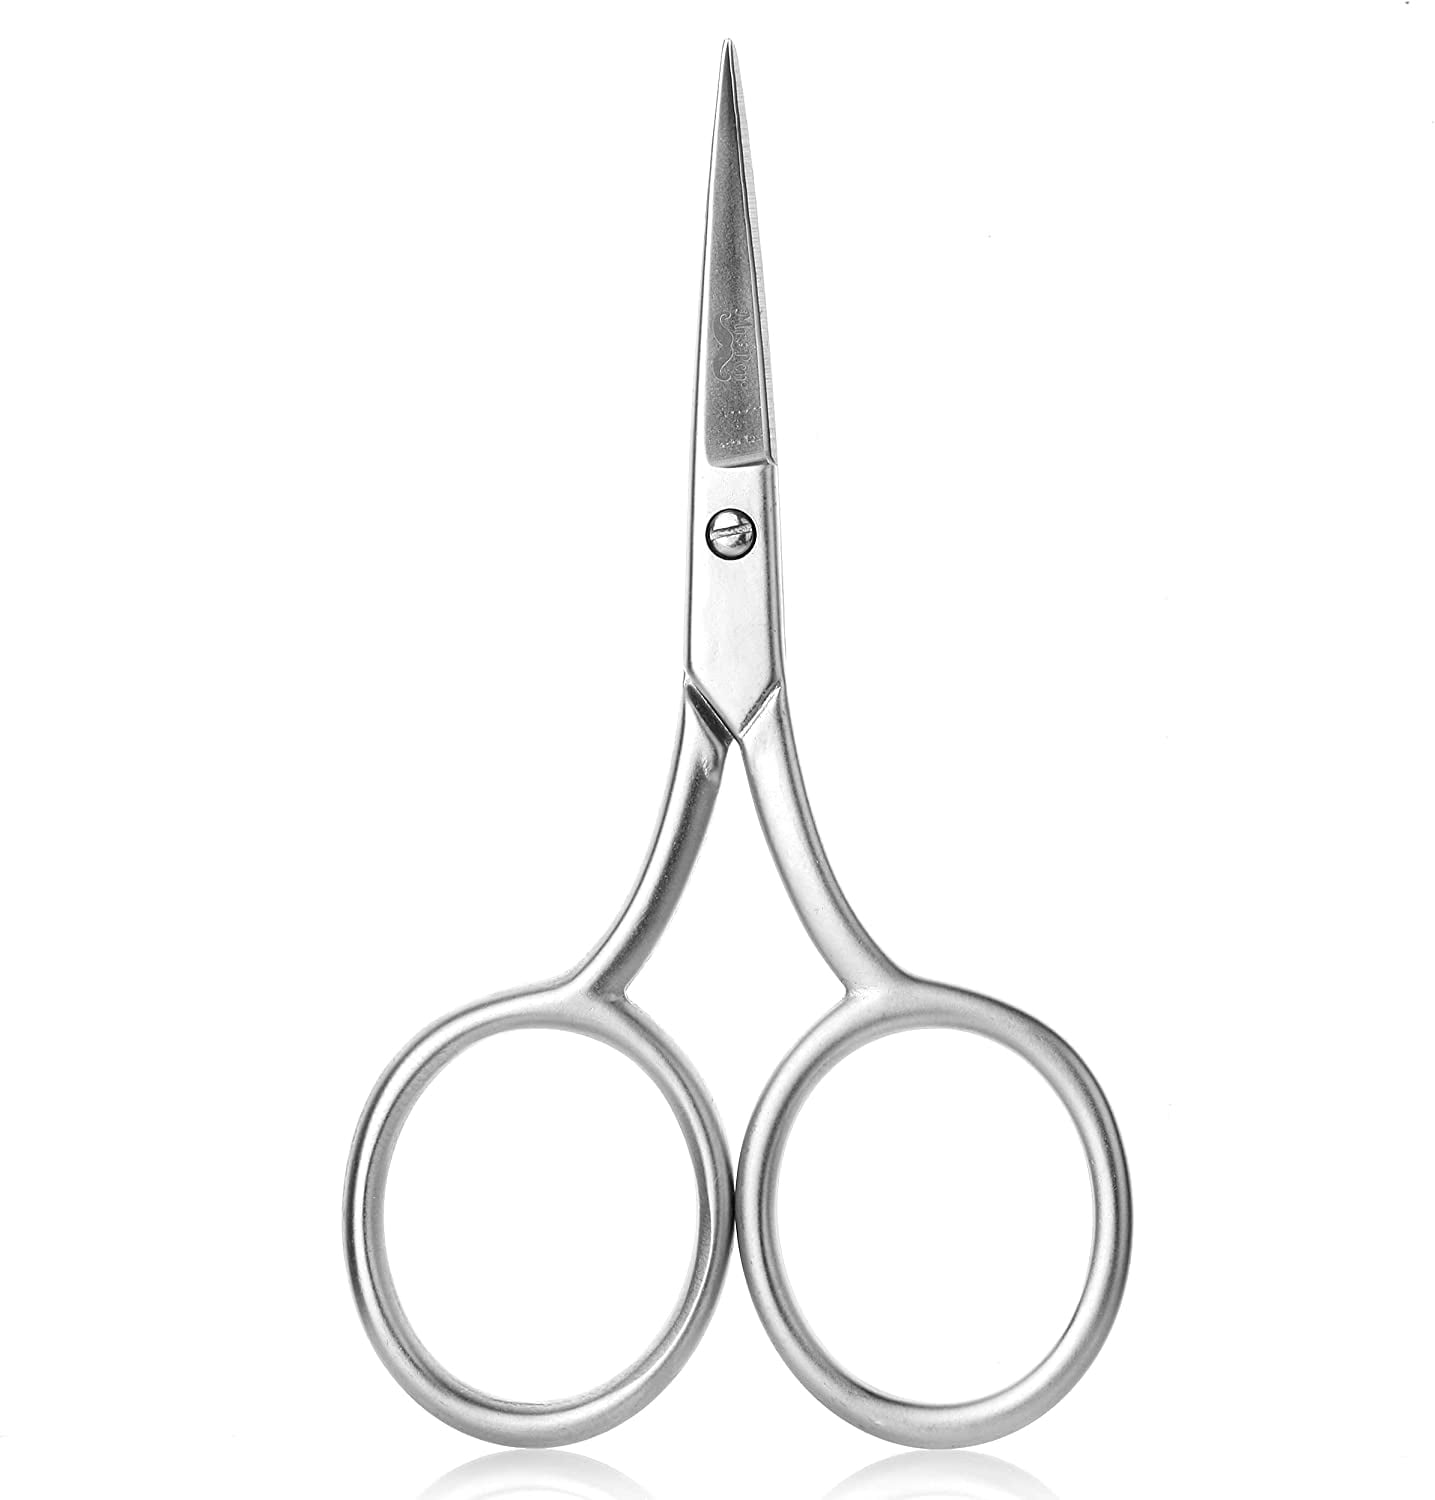 Small sharp scissors-Glexal 5 Inch Precision Scissors-2 pack,razor Sharp  Blade Shears for craft embroidery sewing school office cutting